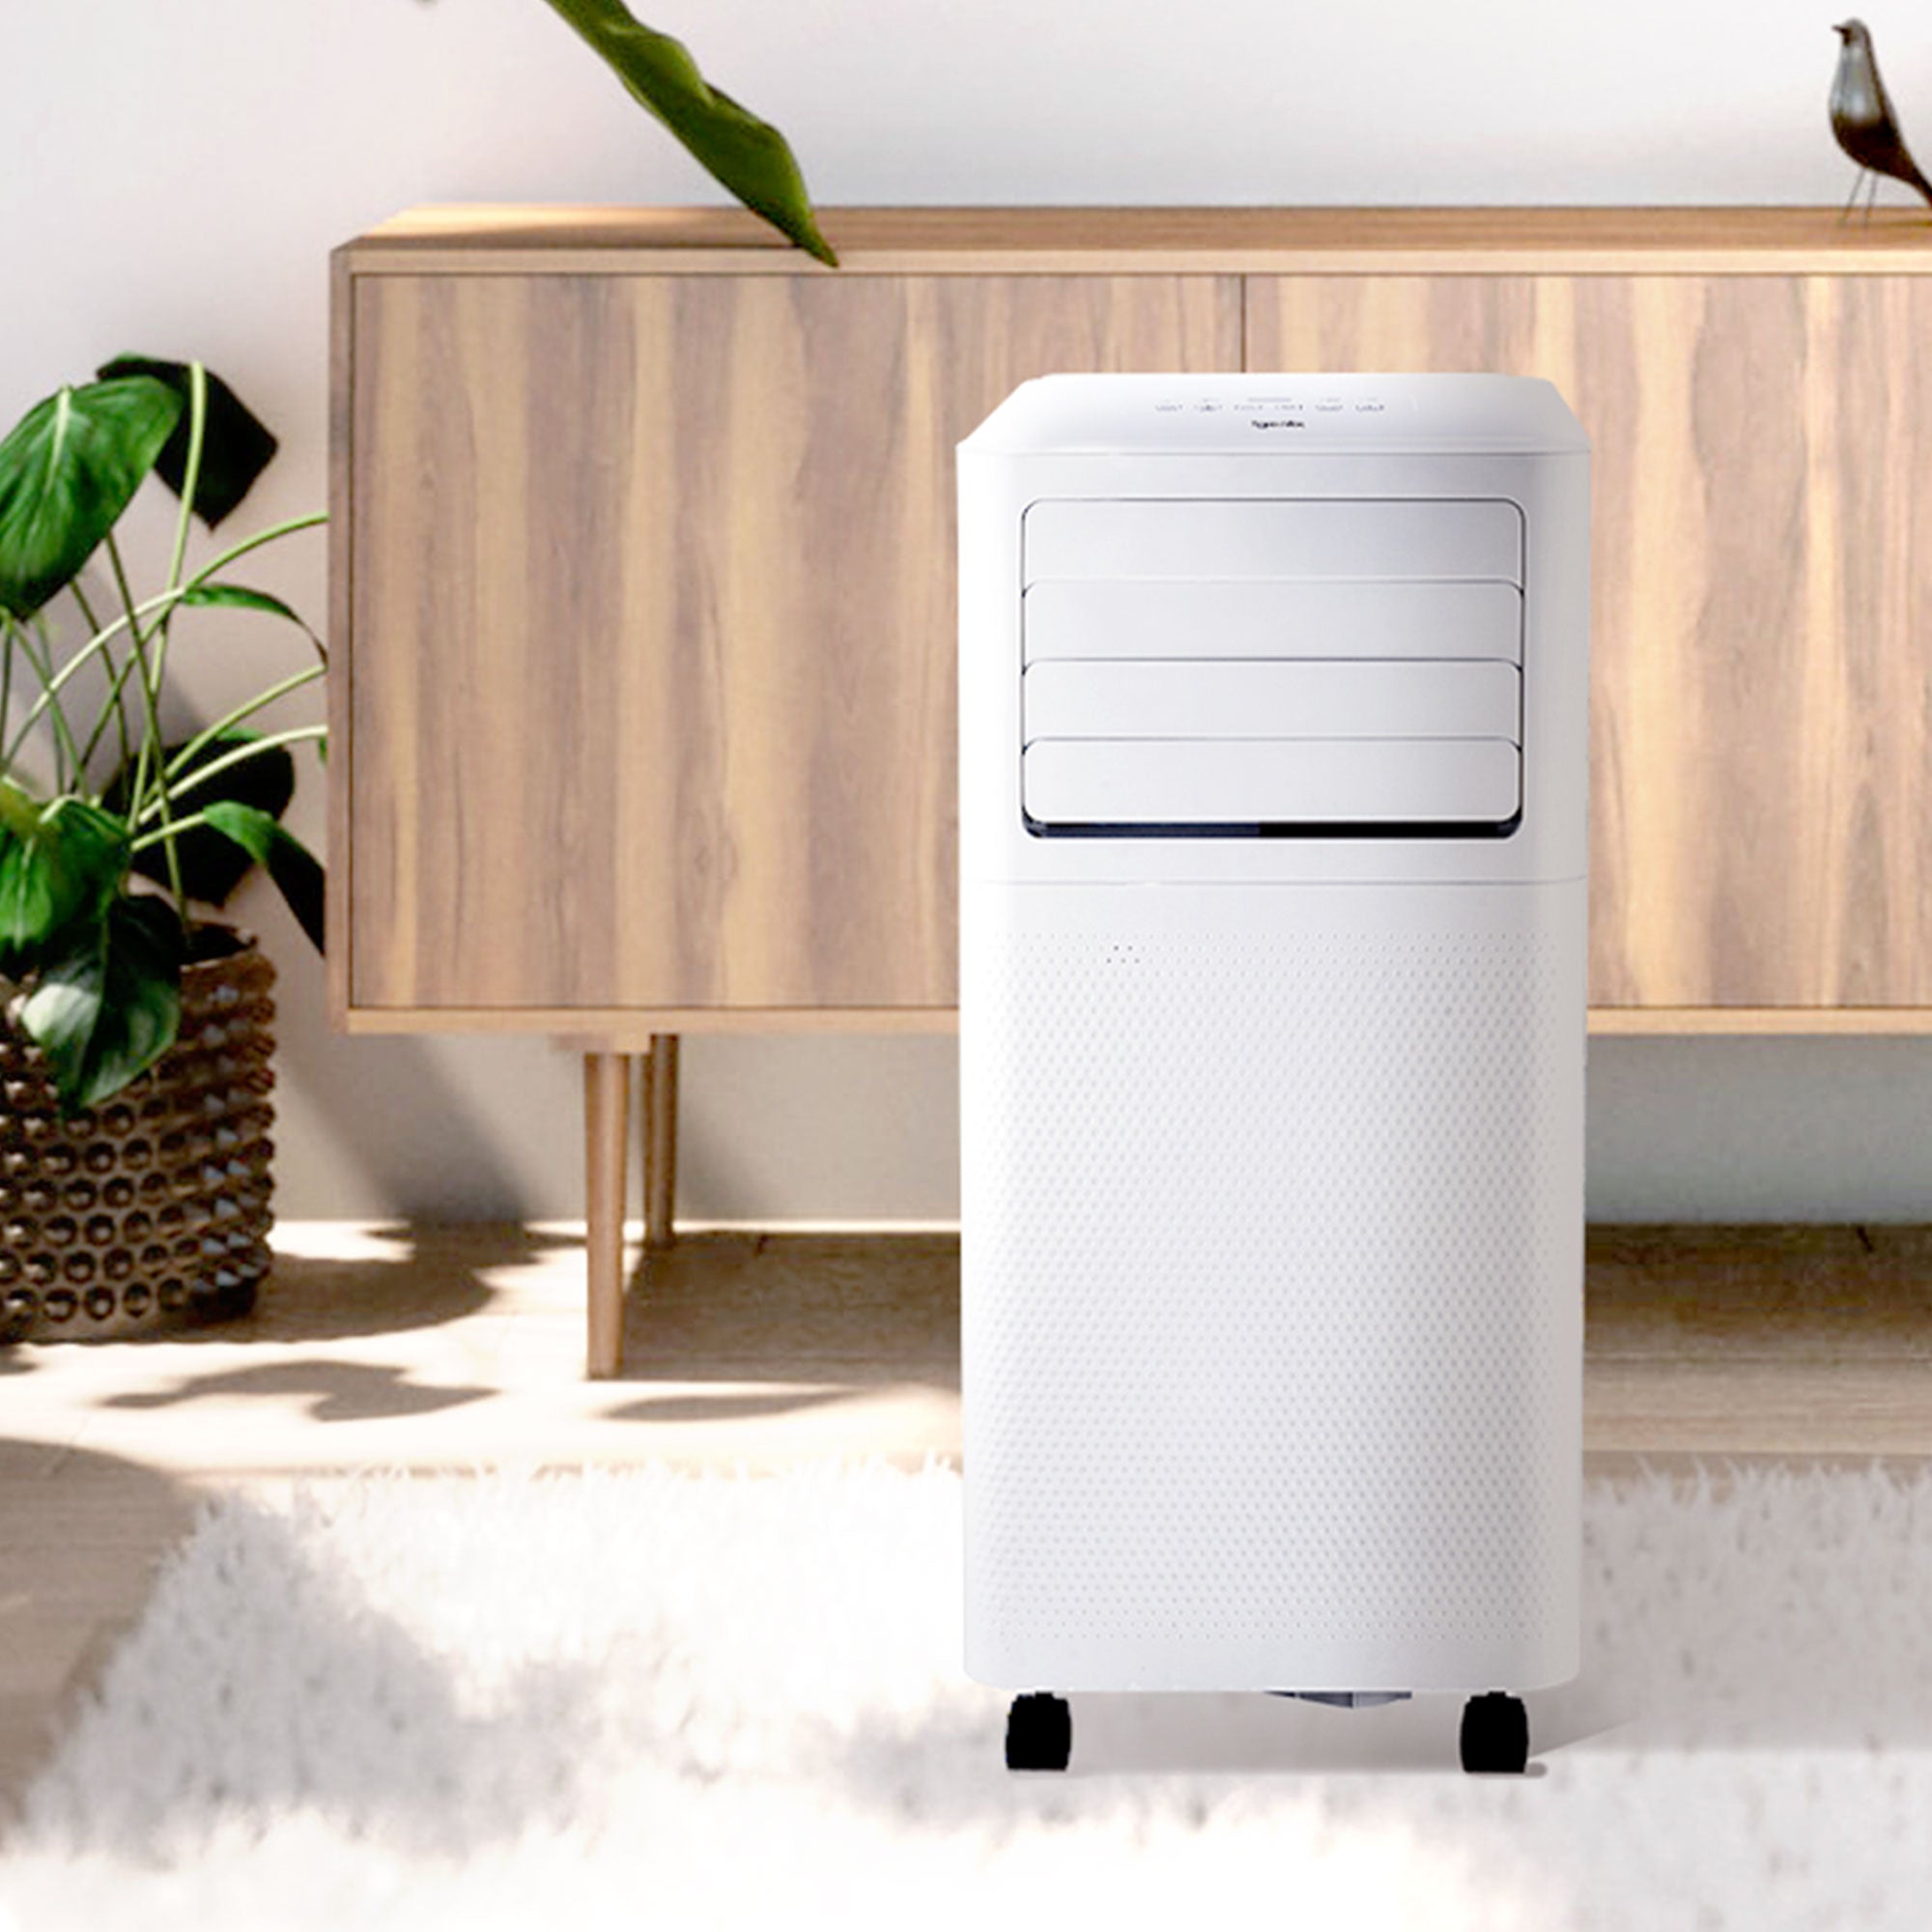 3-in-1 Portable Air Conditioner, Cooling, Fan & Dehumidifier, 9000 BTU